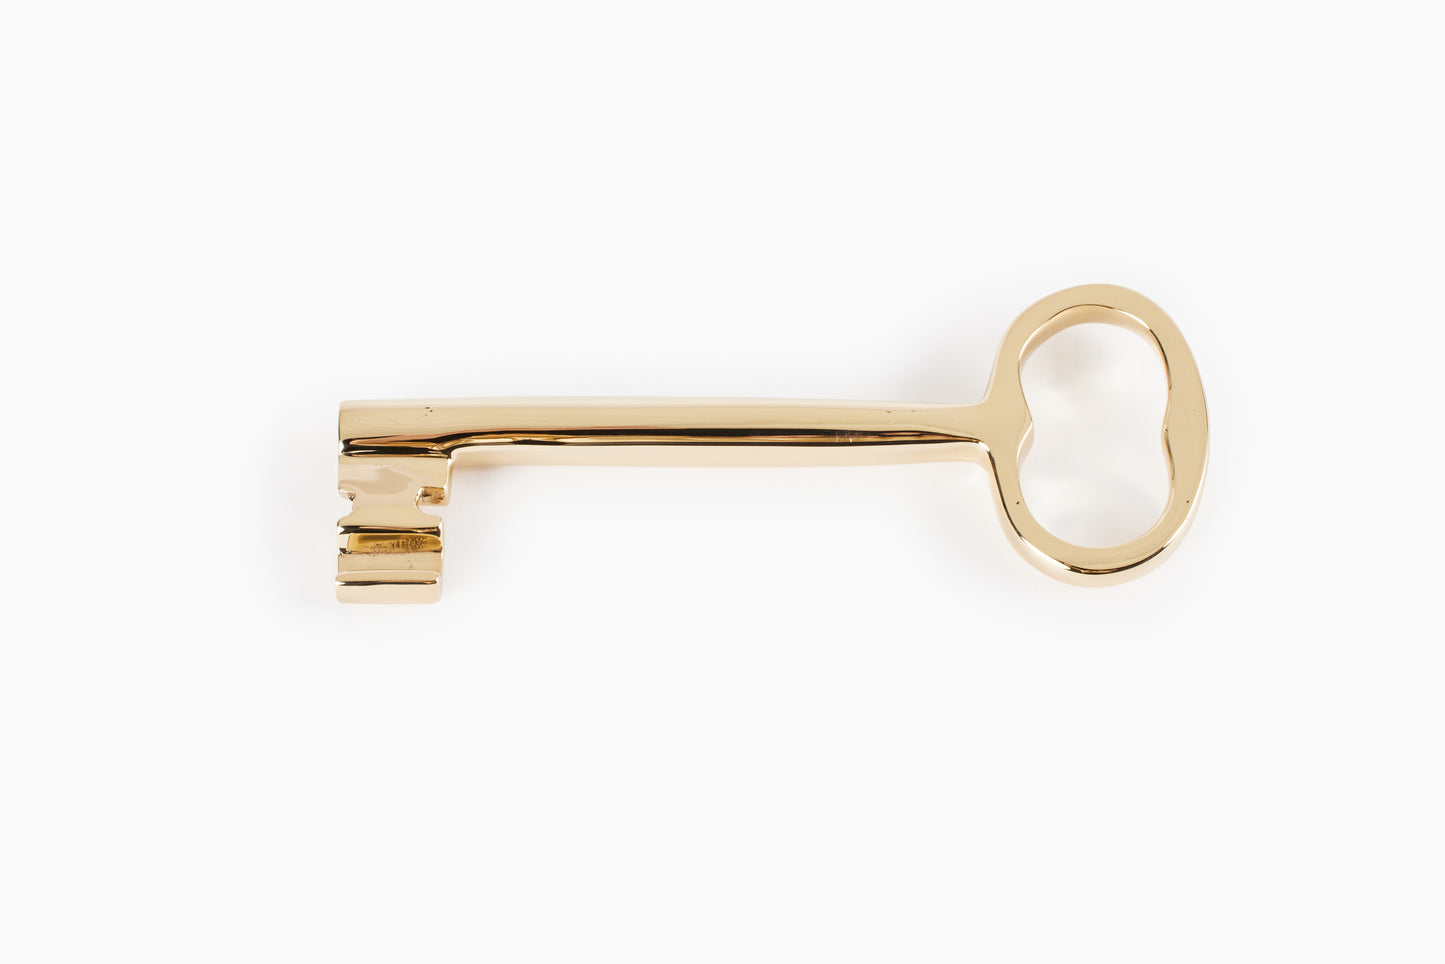 Commune Brass Key